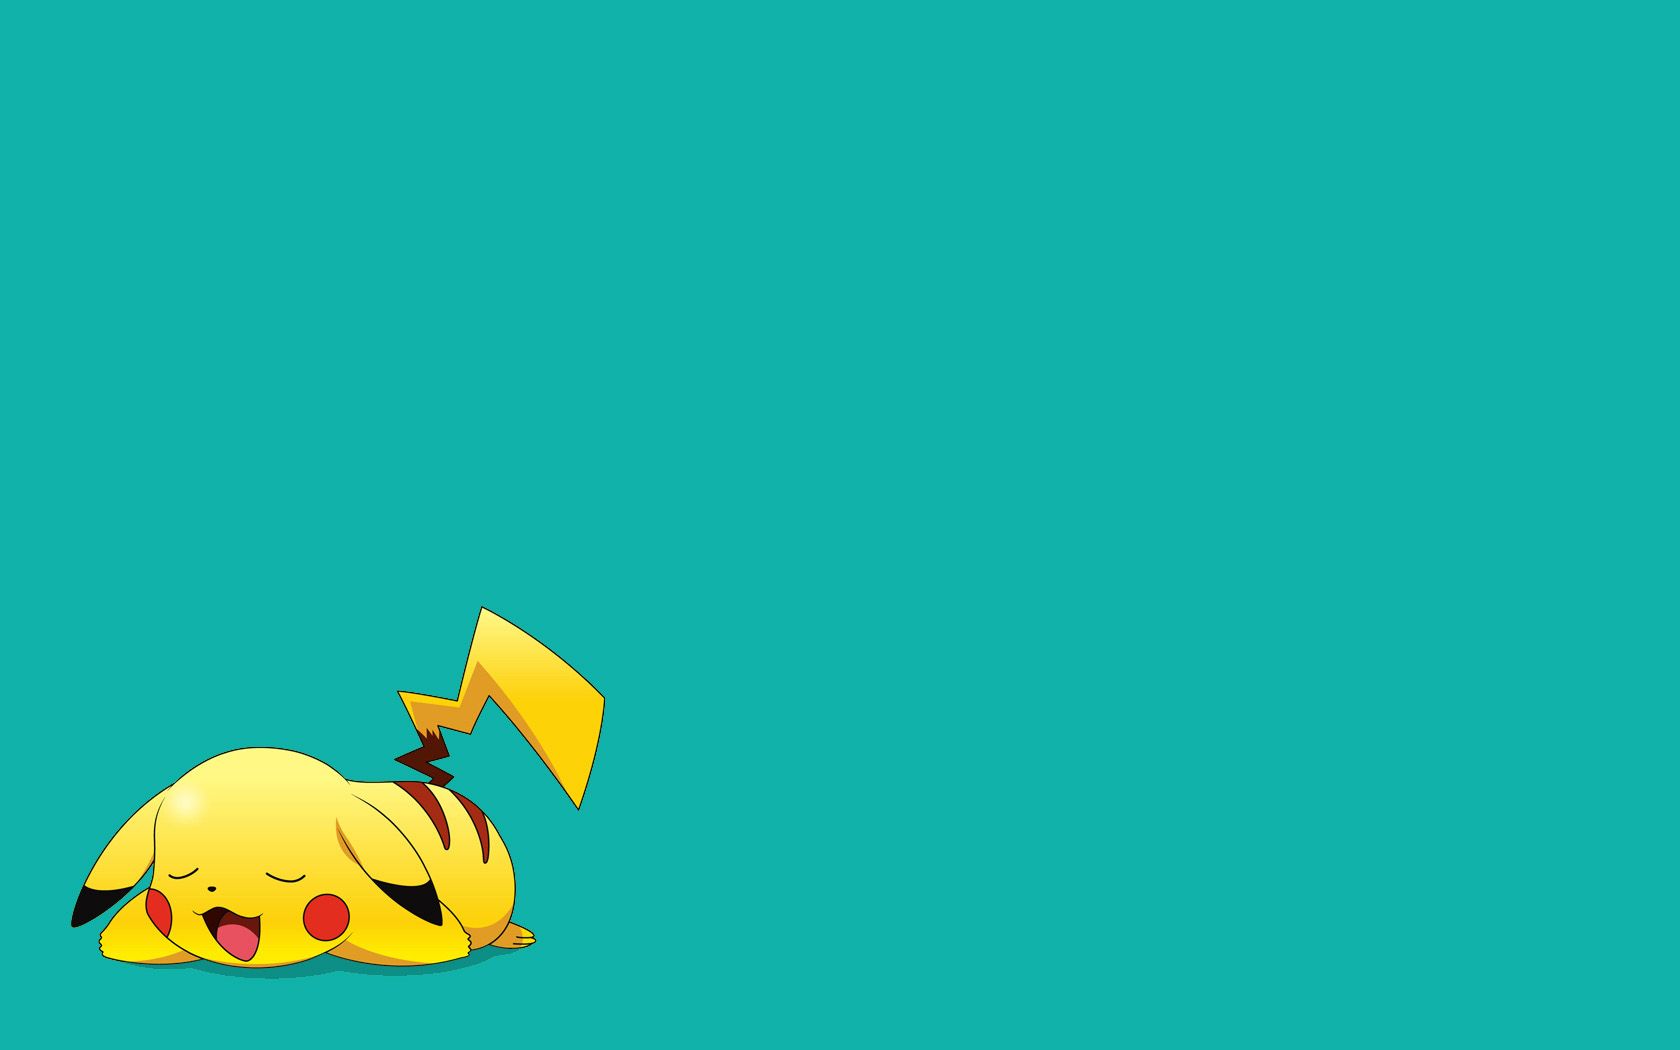 Pikachu Wallpaper for Computer